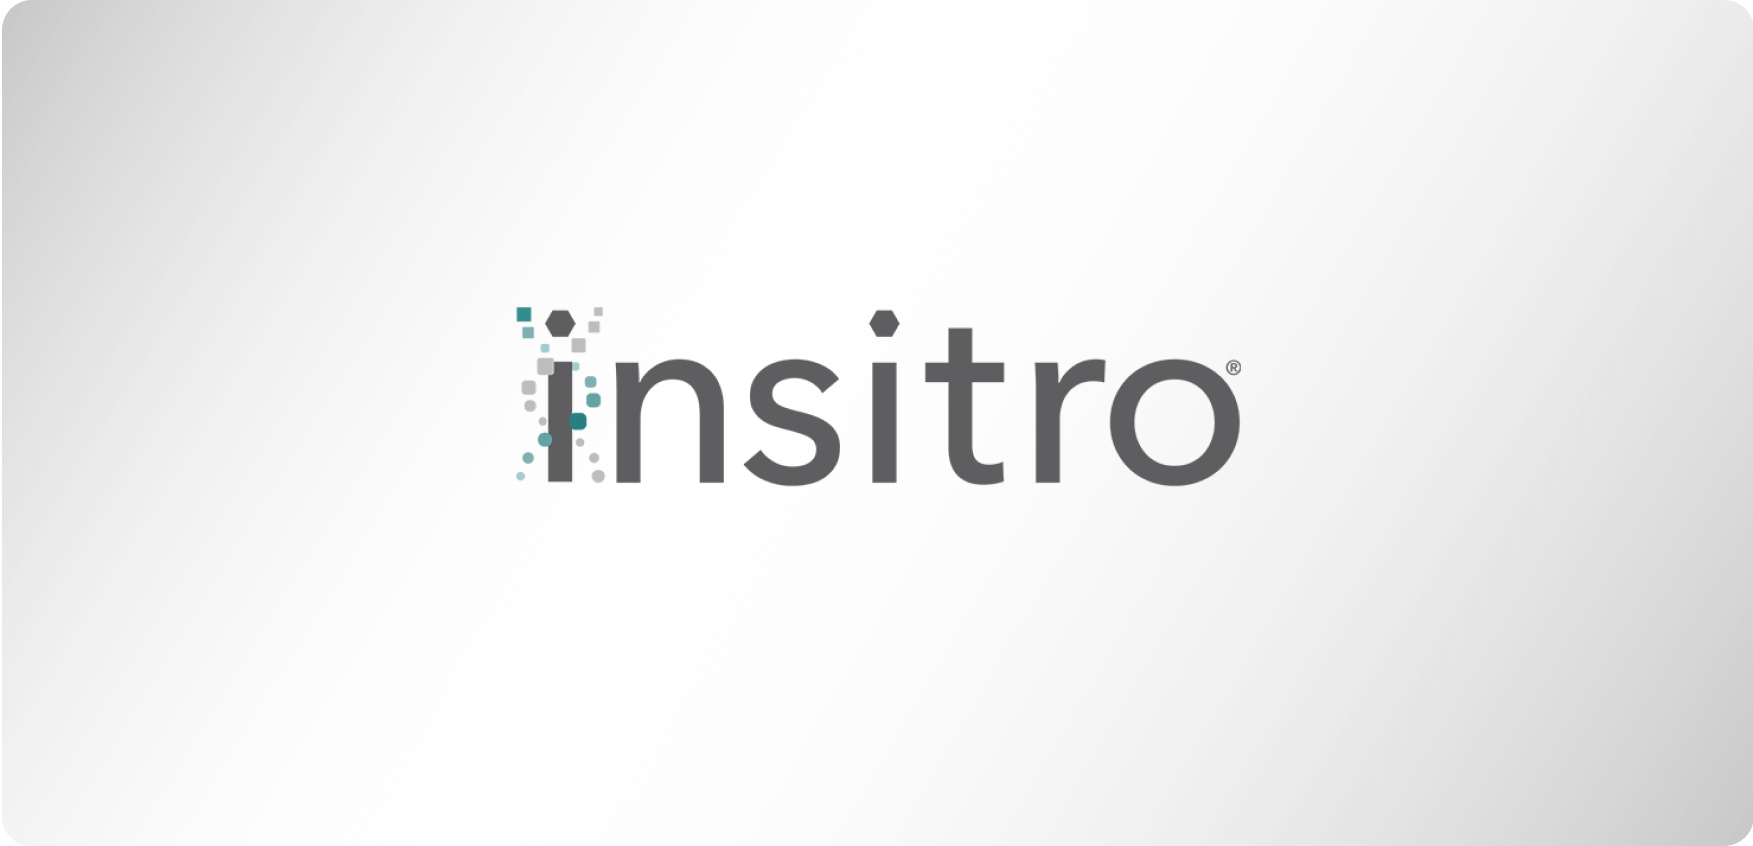 Insitro branding design logo on a gray background